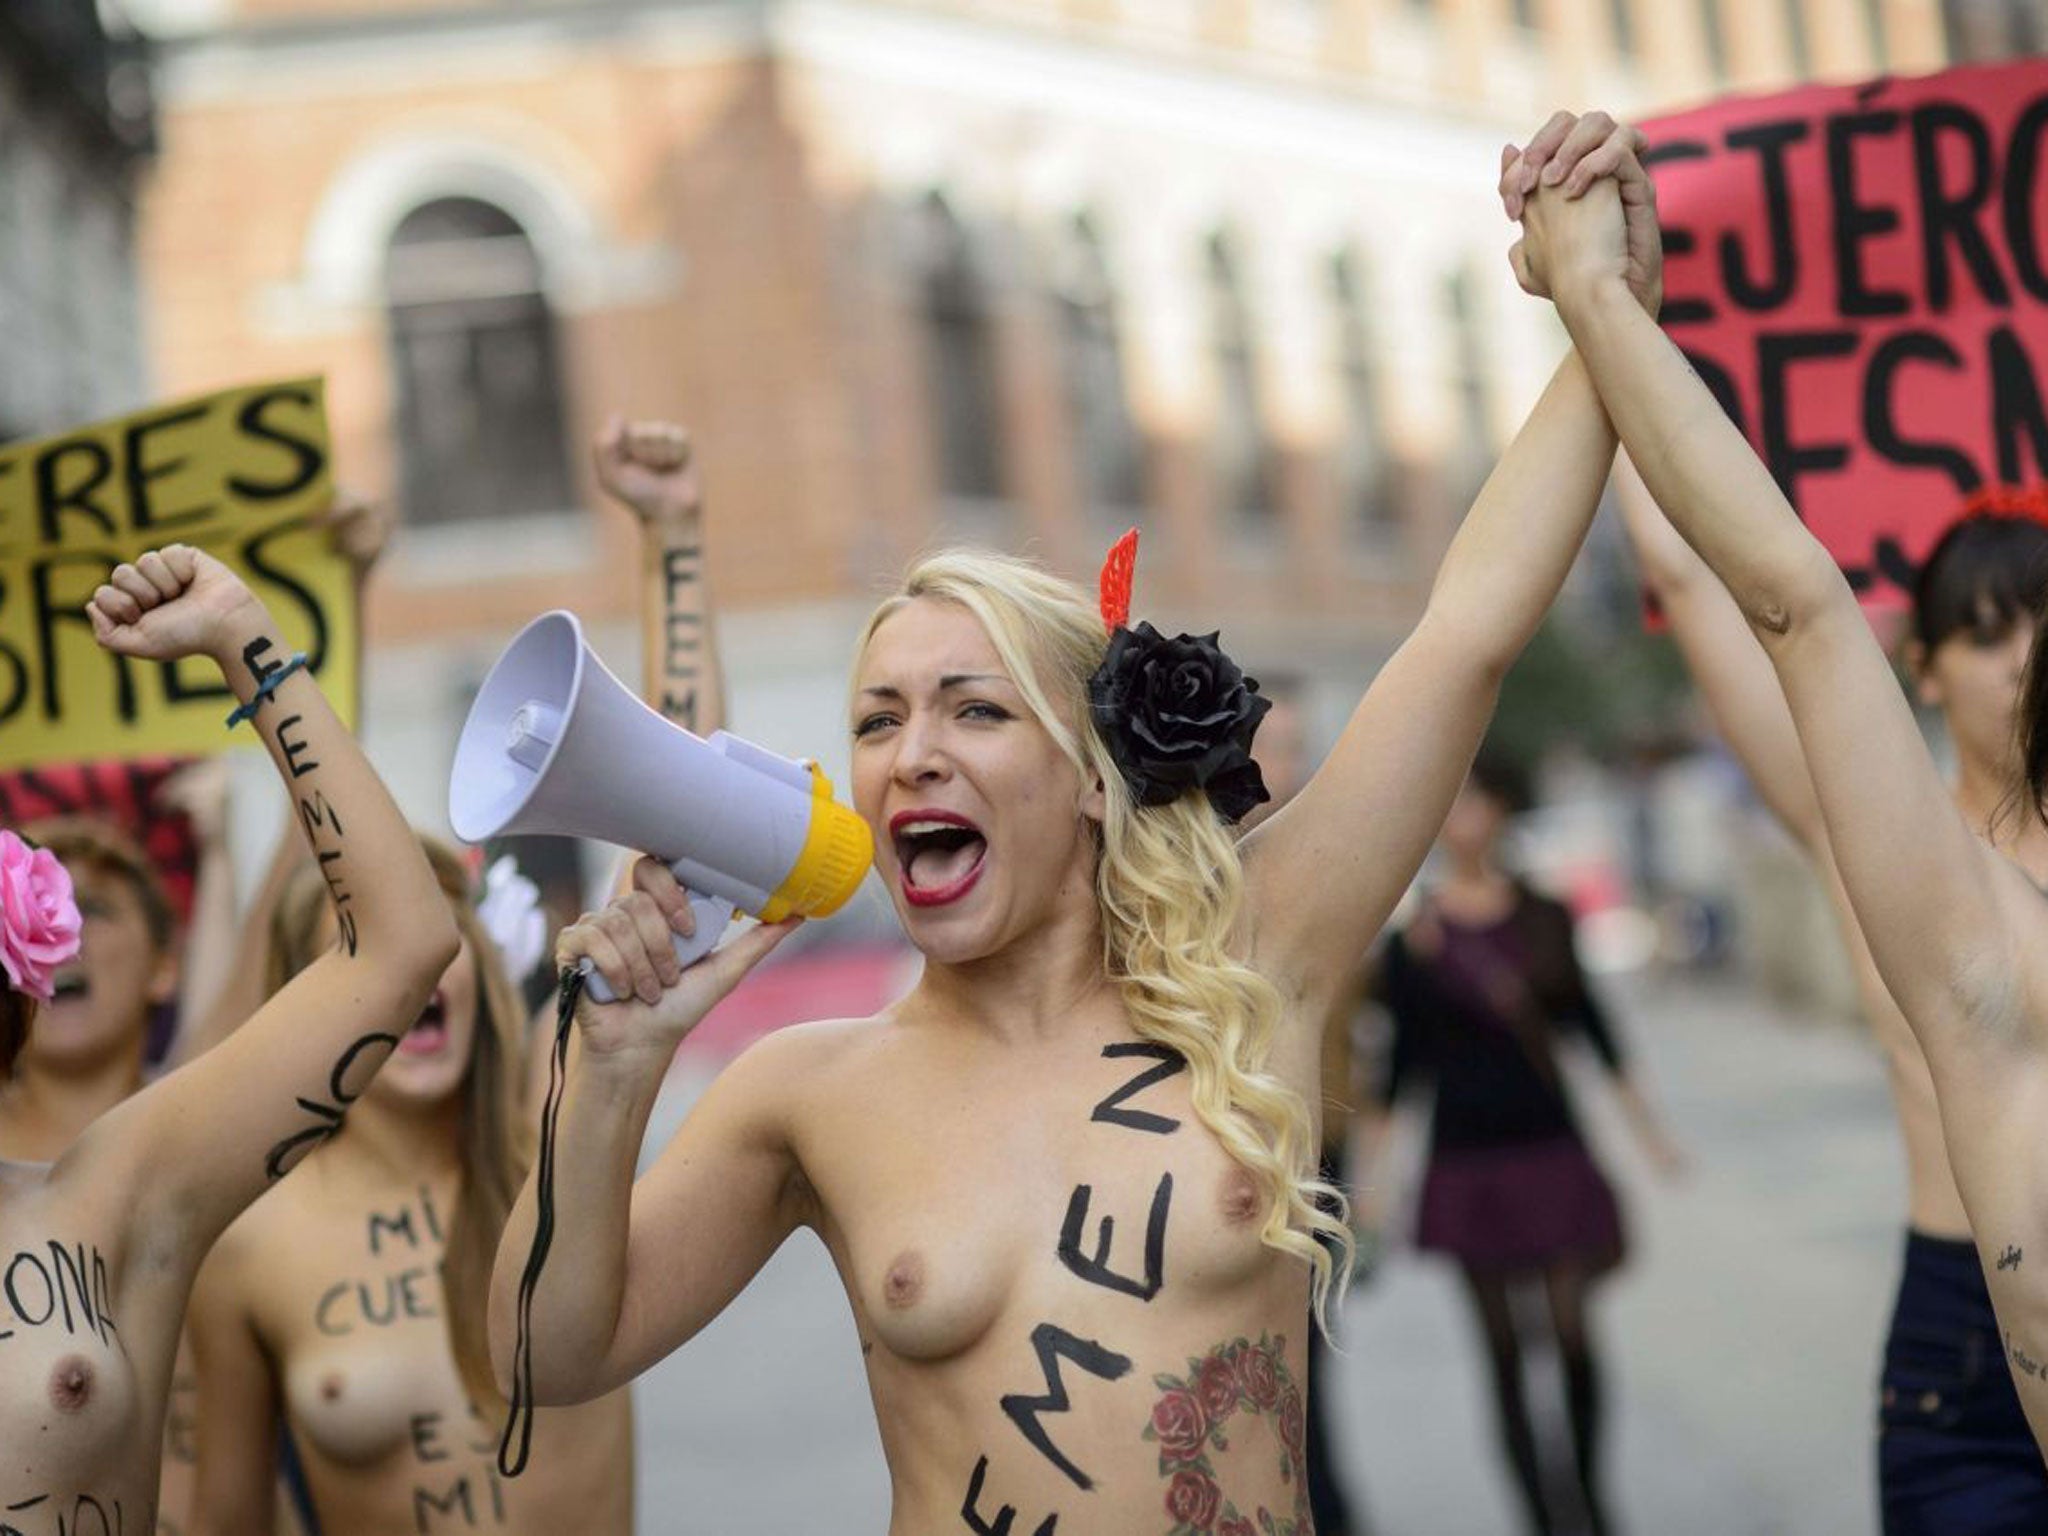 Ukrainian leader of feminist movement Femen Inna Shevchenko